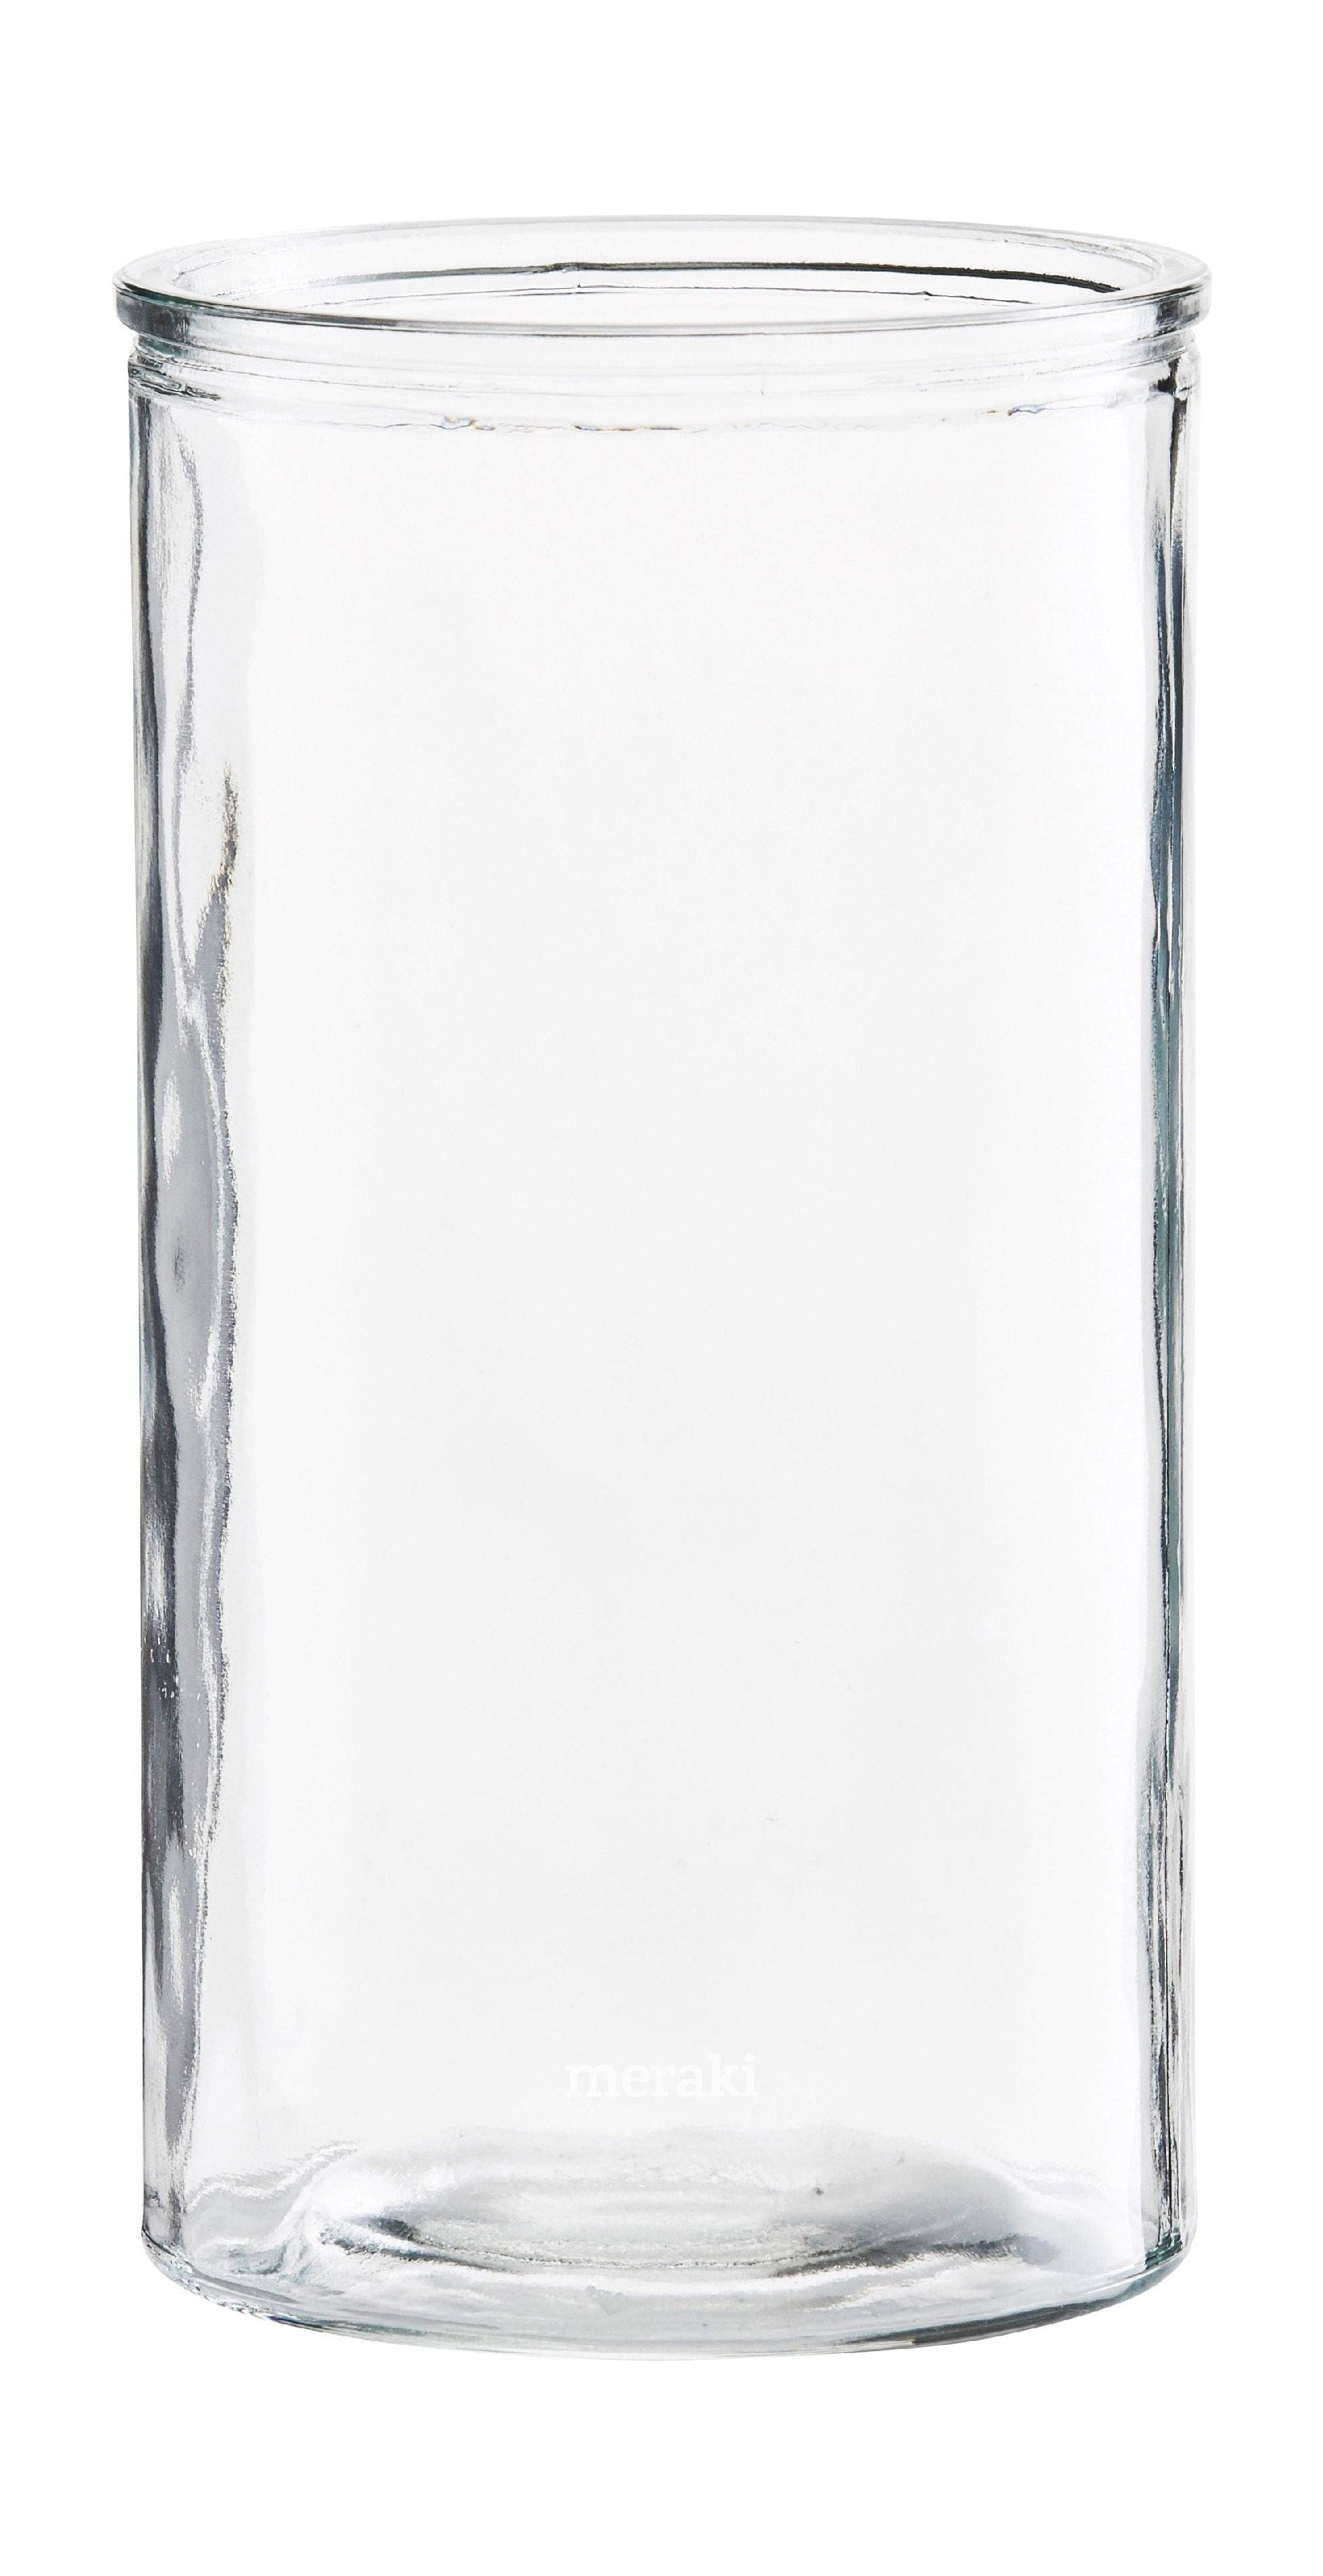 Wazon cylindra Meraki, Øx H 13x24